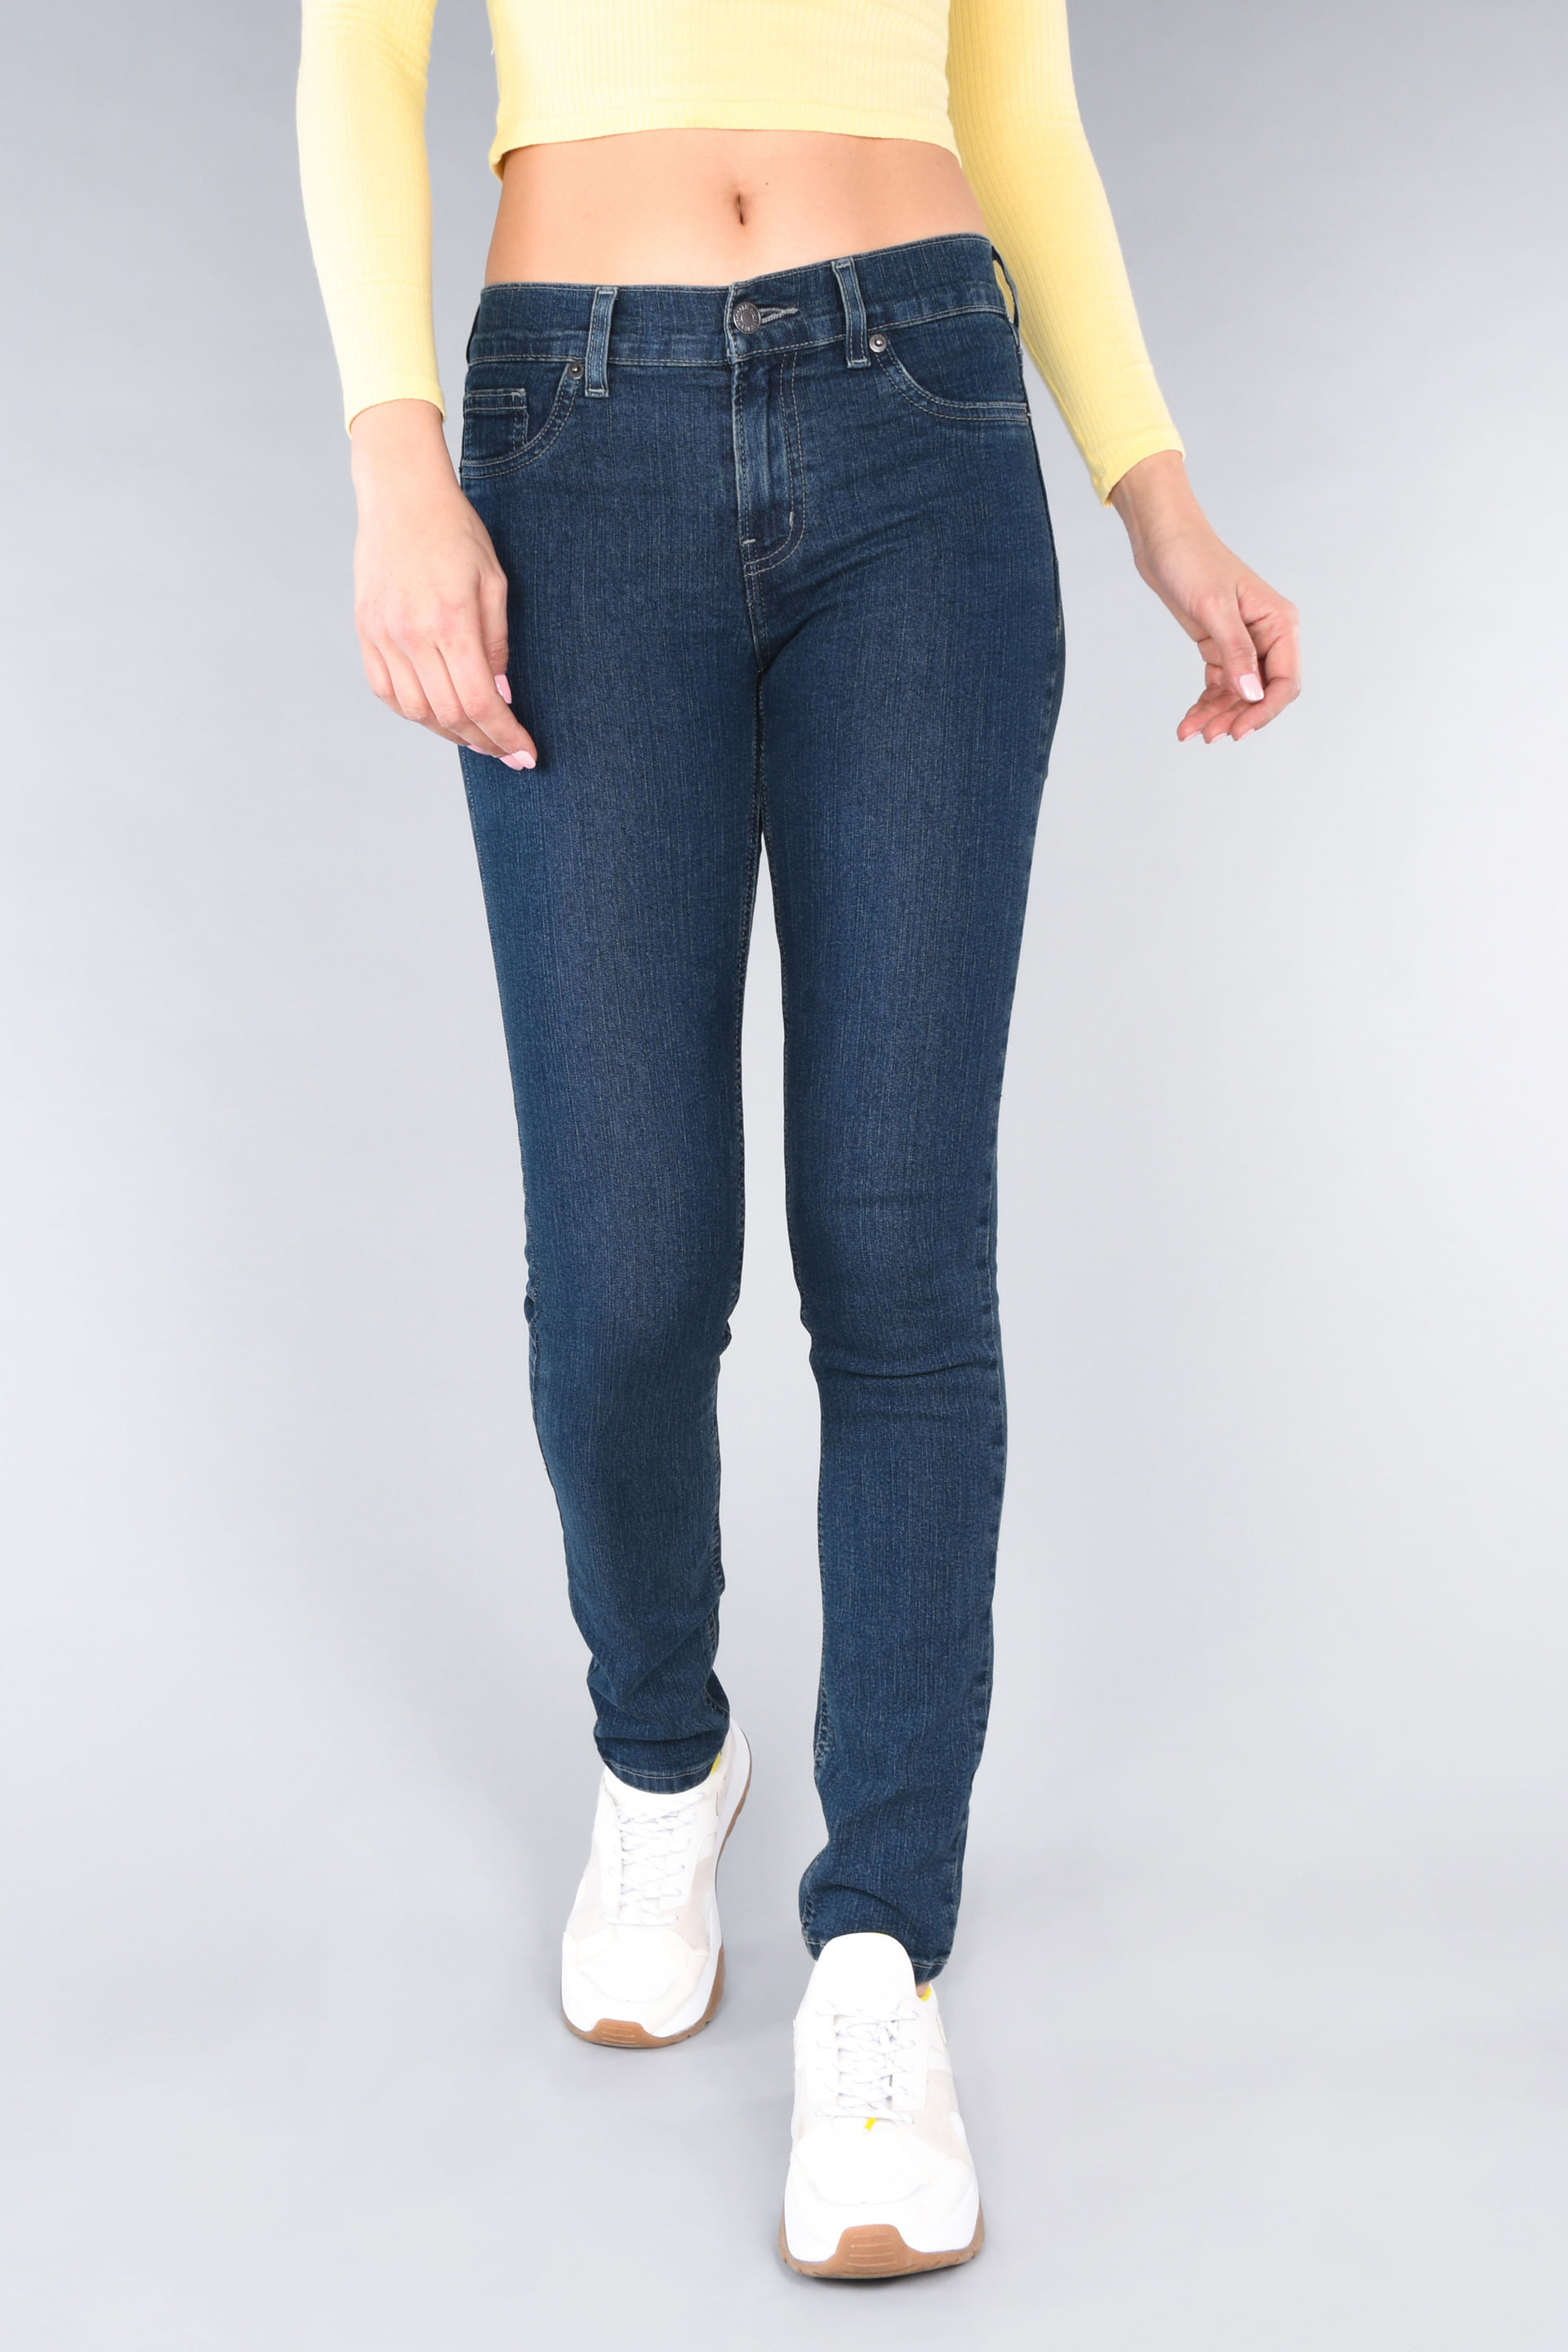  MilaBrown Jeans para mujer, cintura alta, amplios